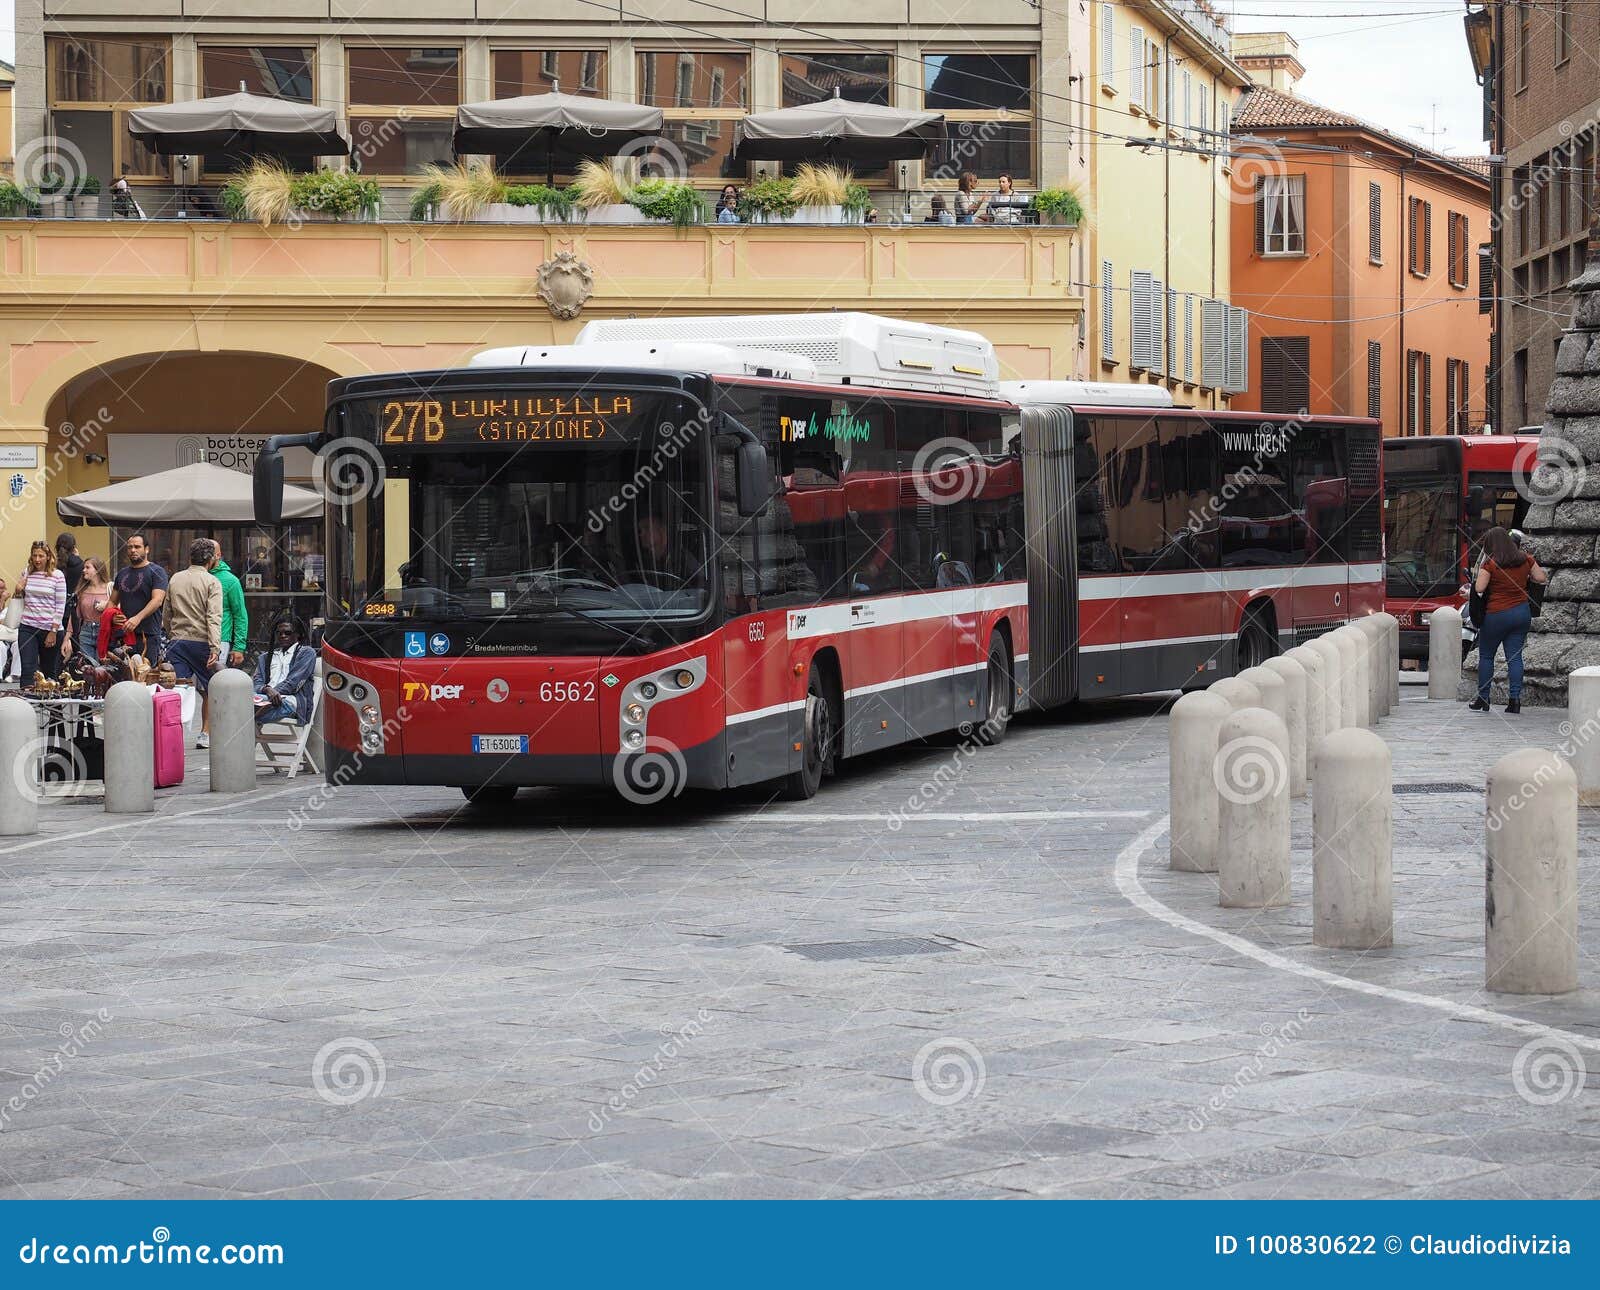 bolognese road trip bus